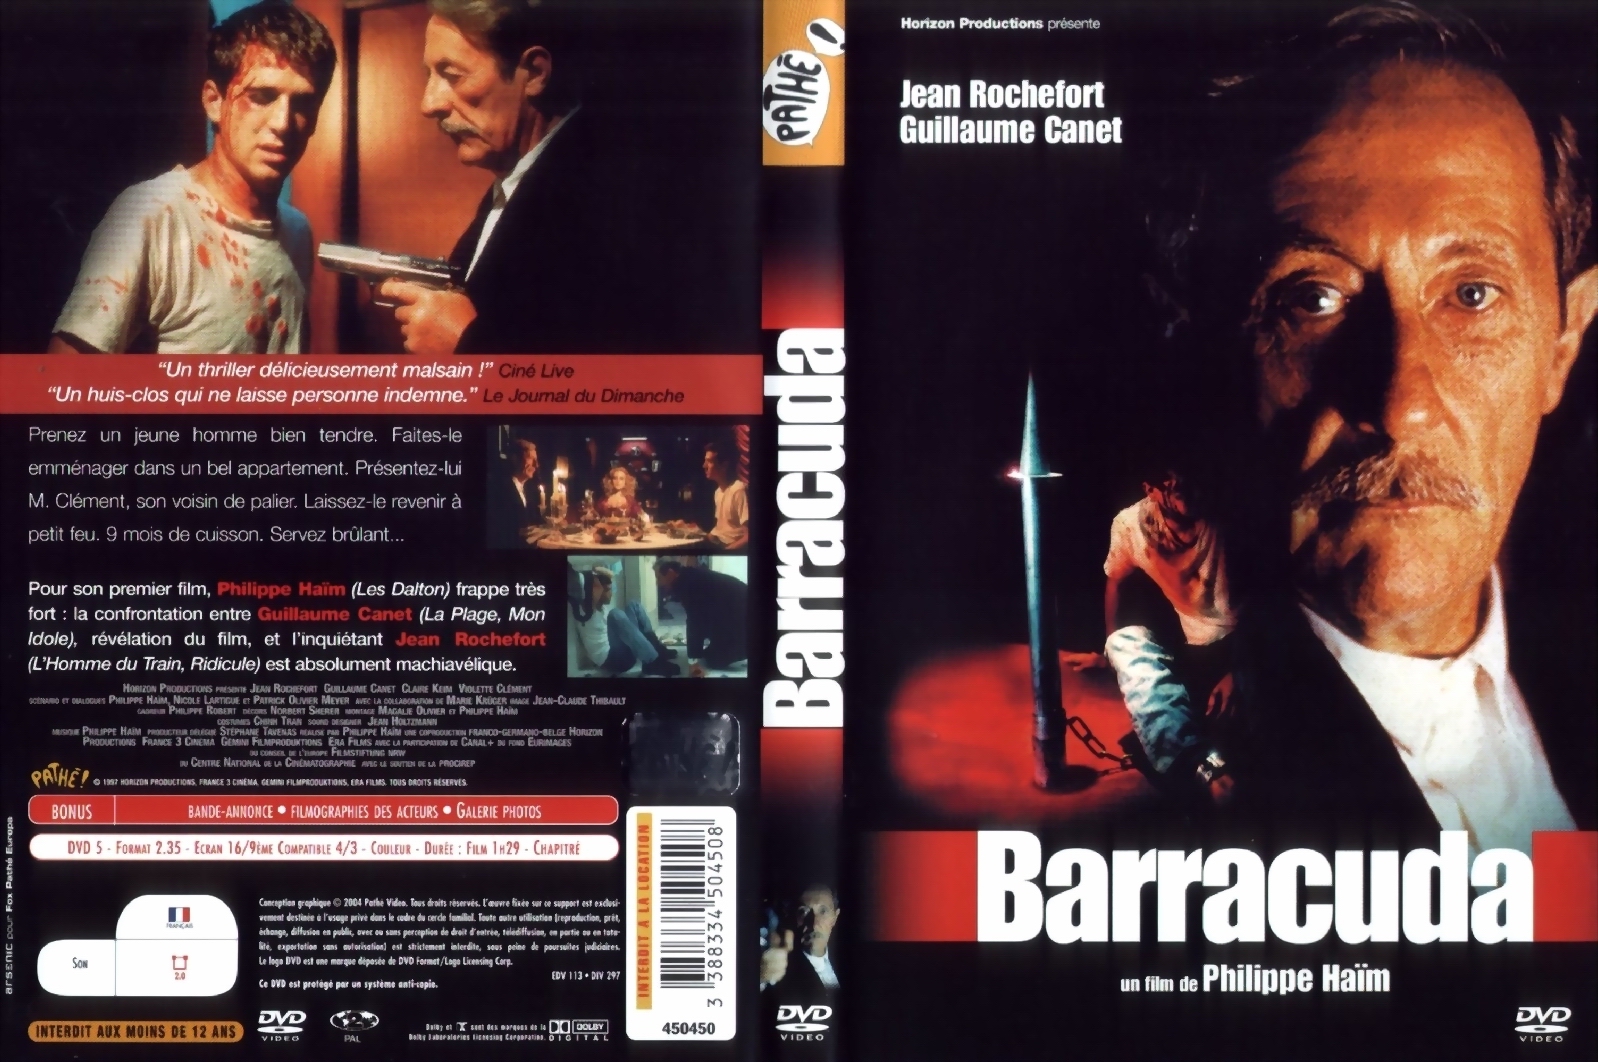 Jaquette DVD Barracuda